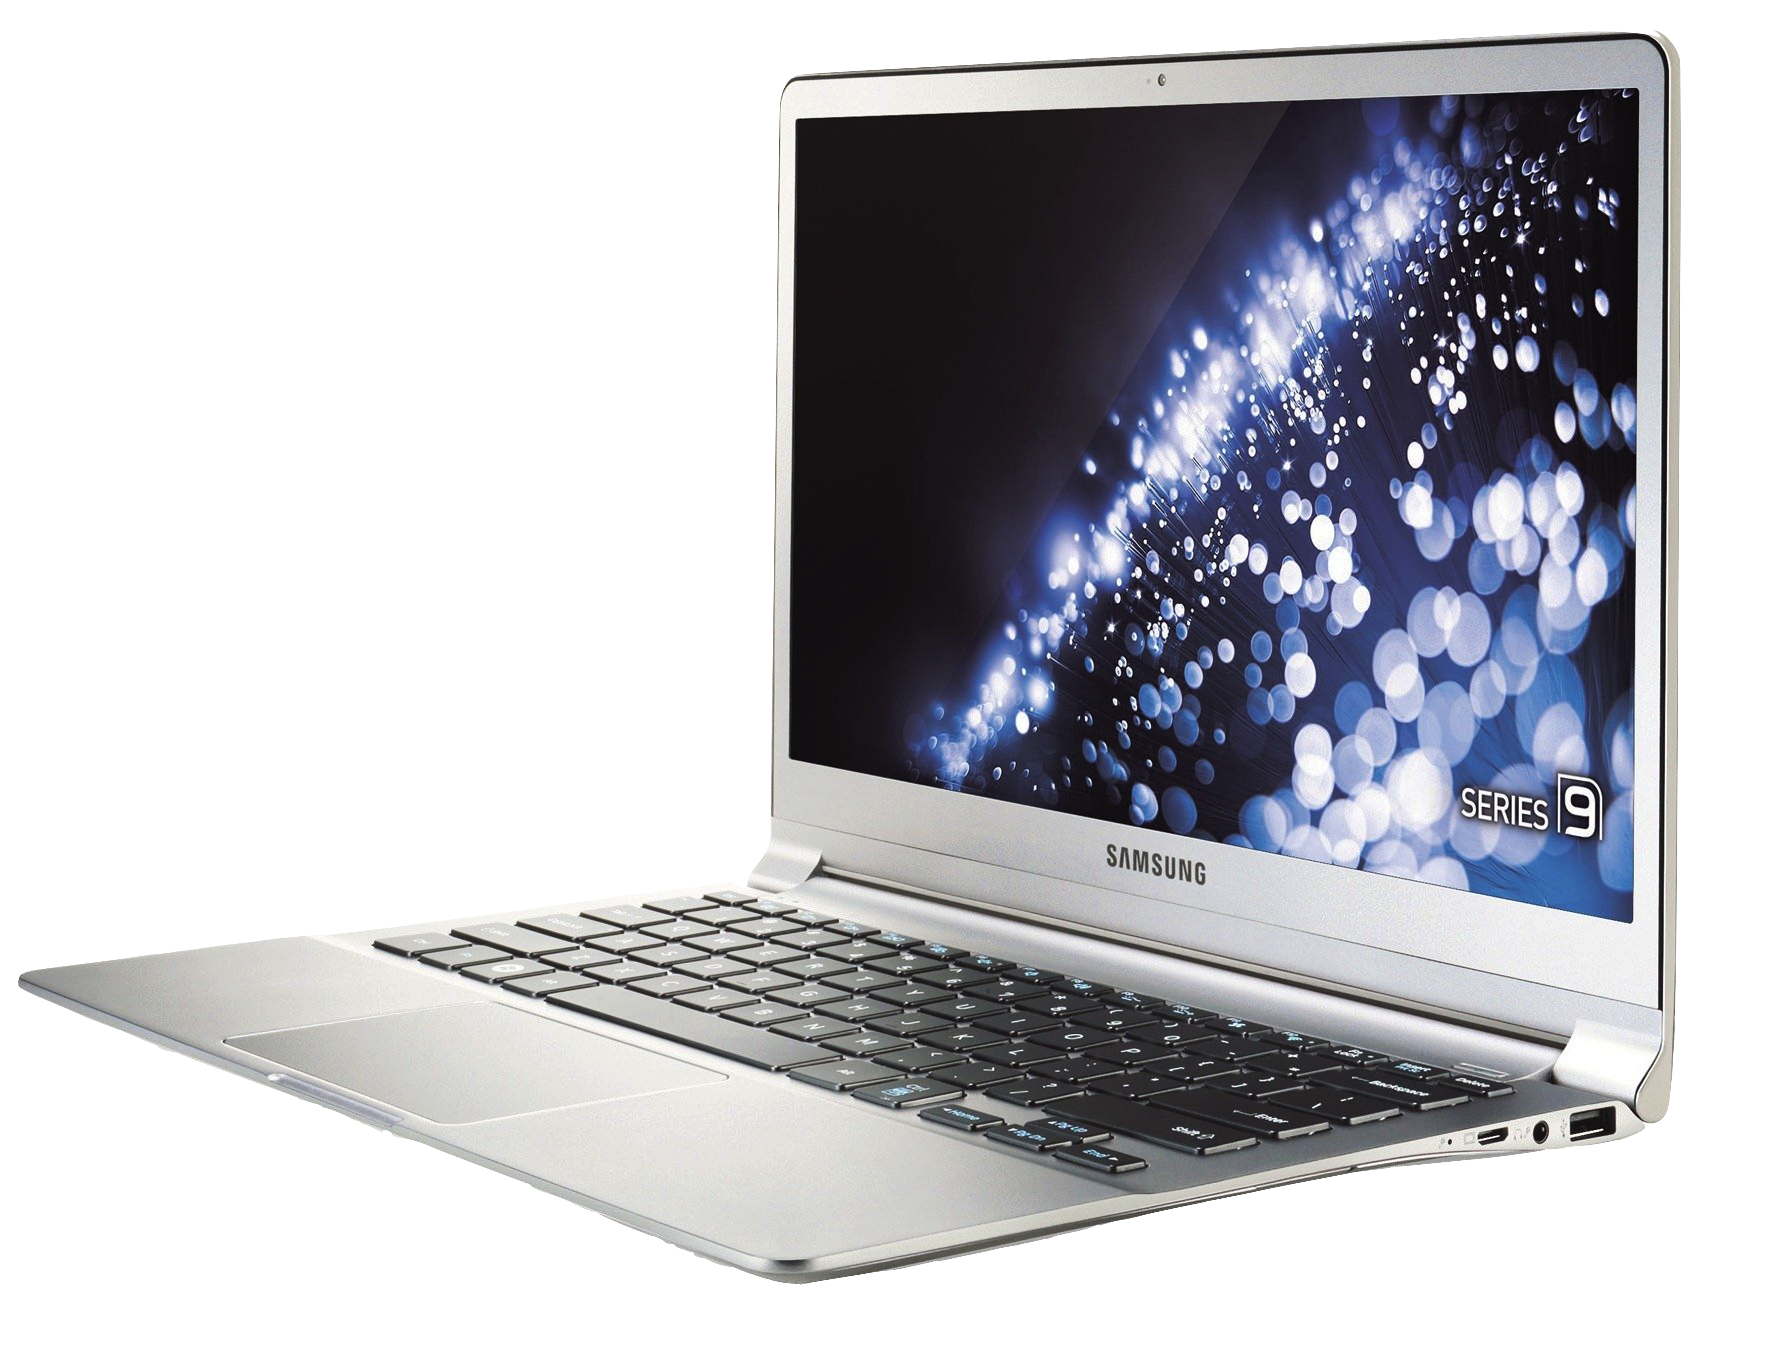 Laptop Notebook Png Image - Lap, Transparent background PNG HD thumbnail